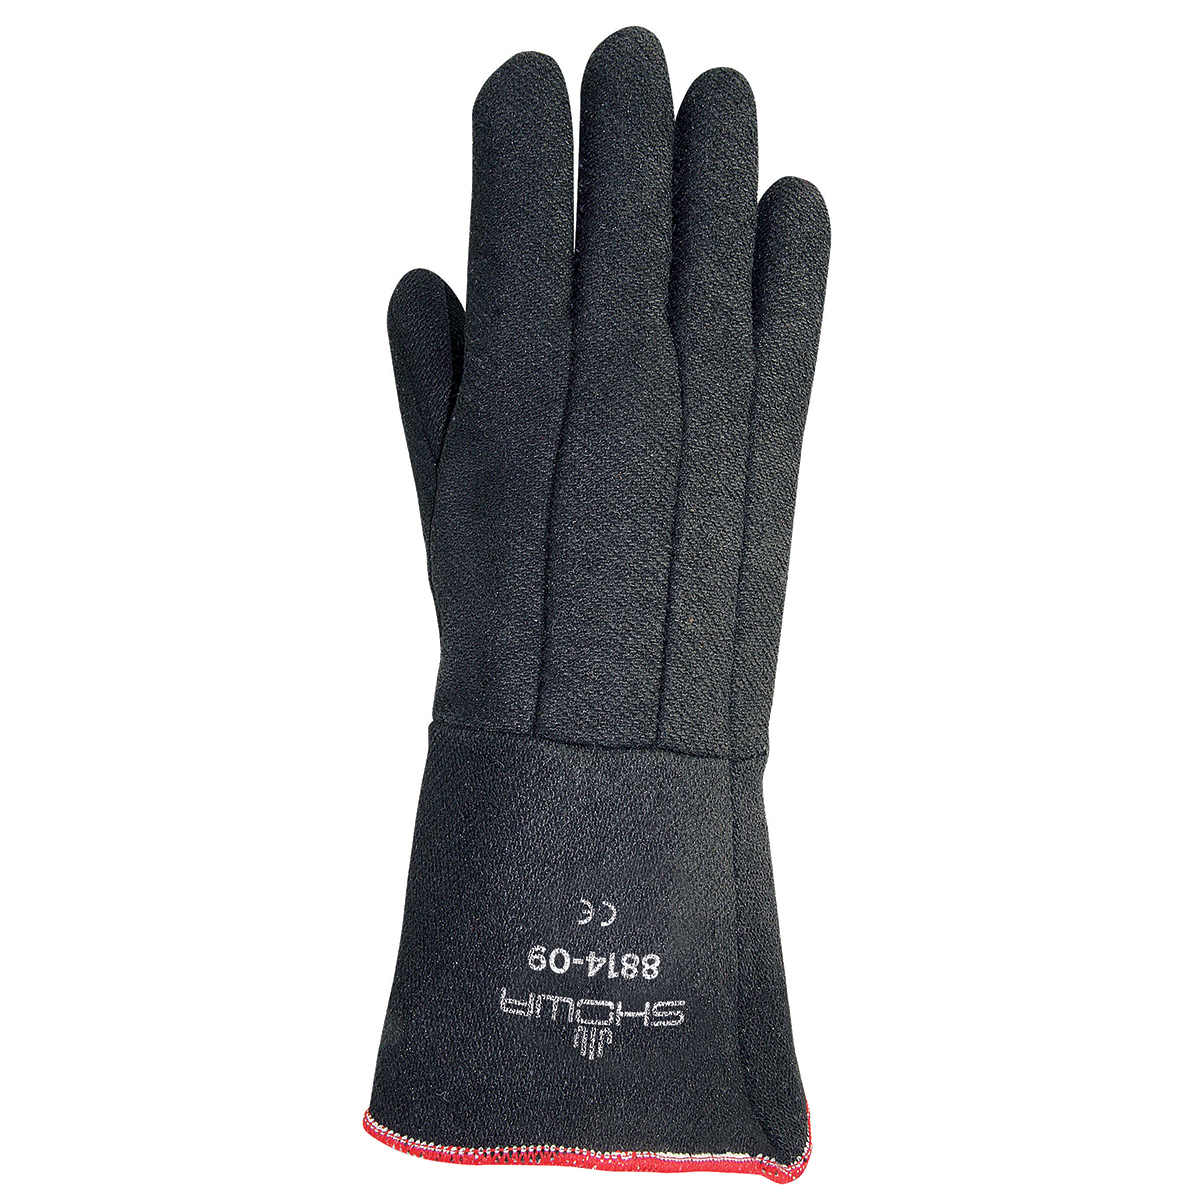 Showa 300BM-08 Coated Gloves, Black/Gray, M